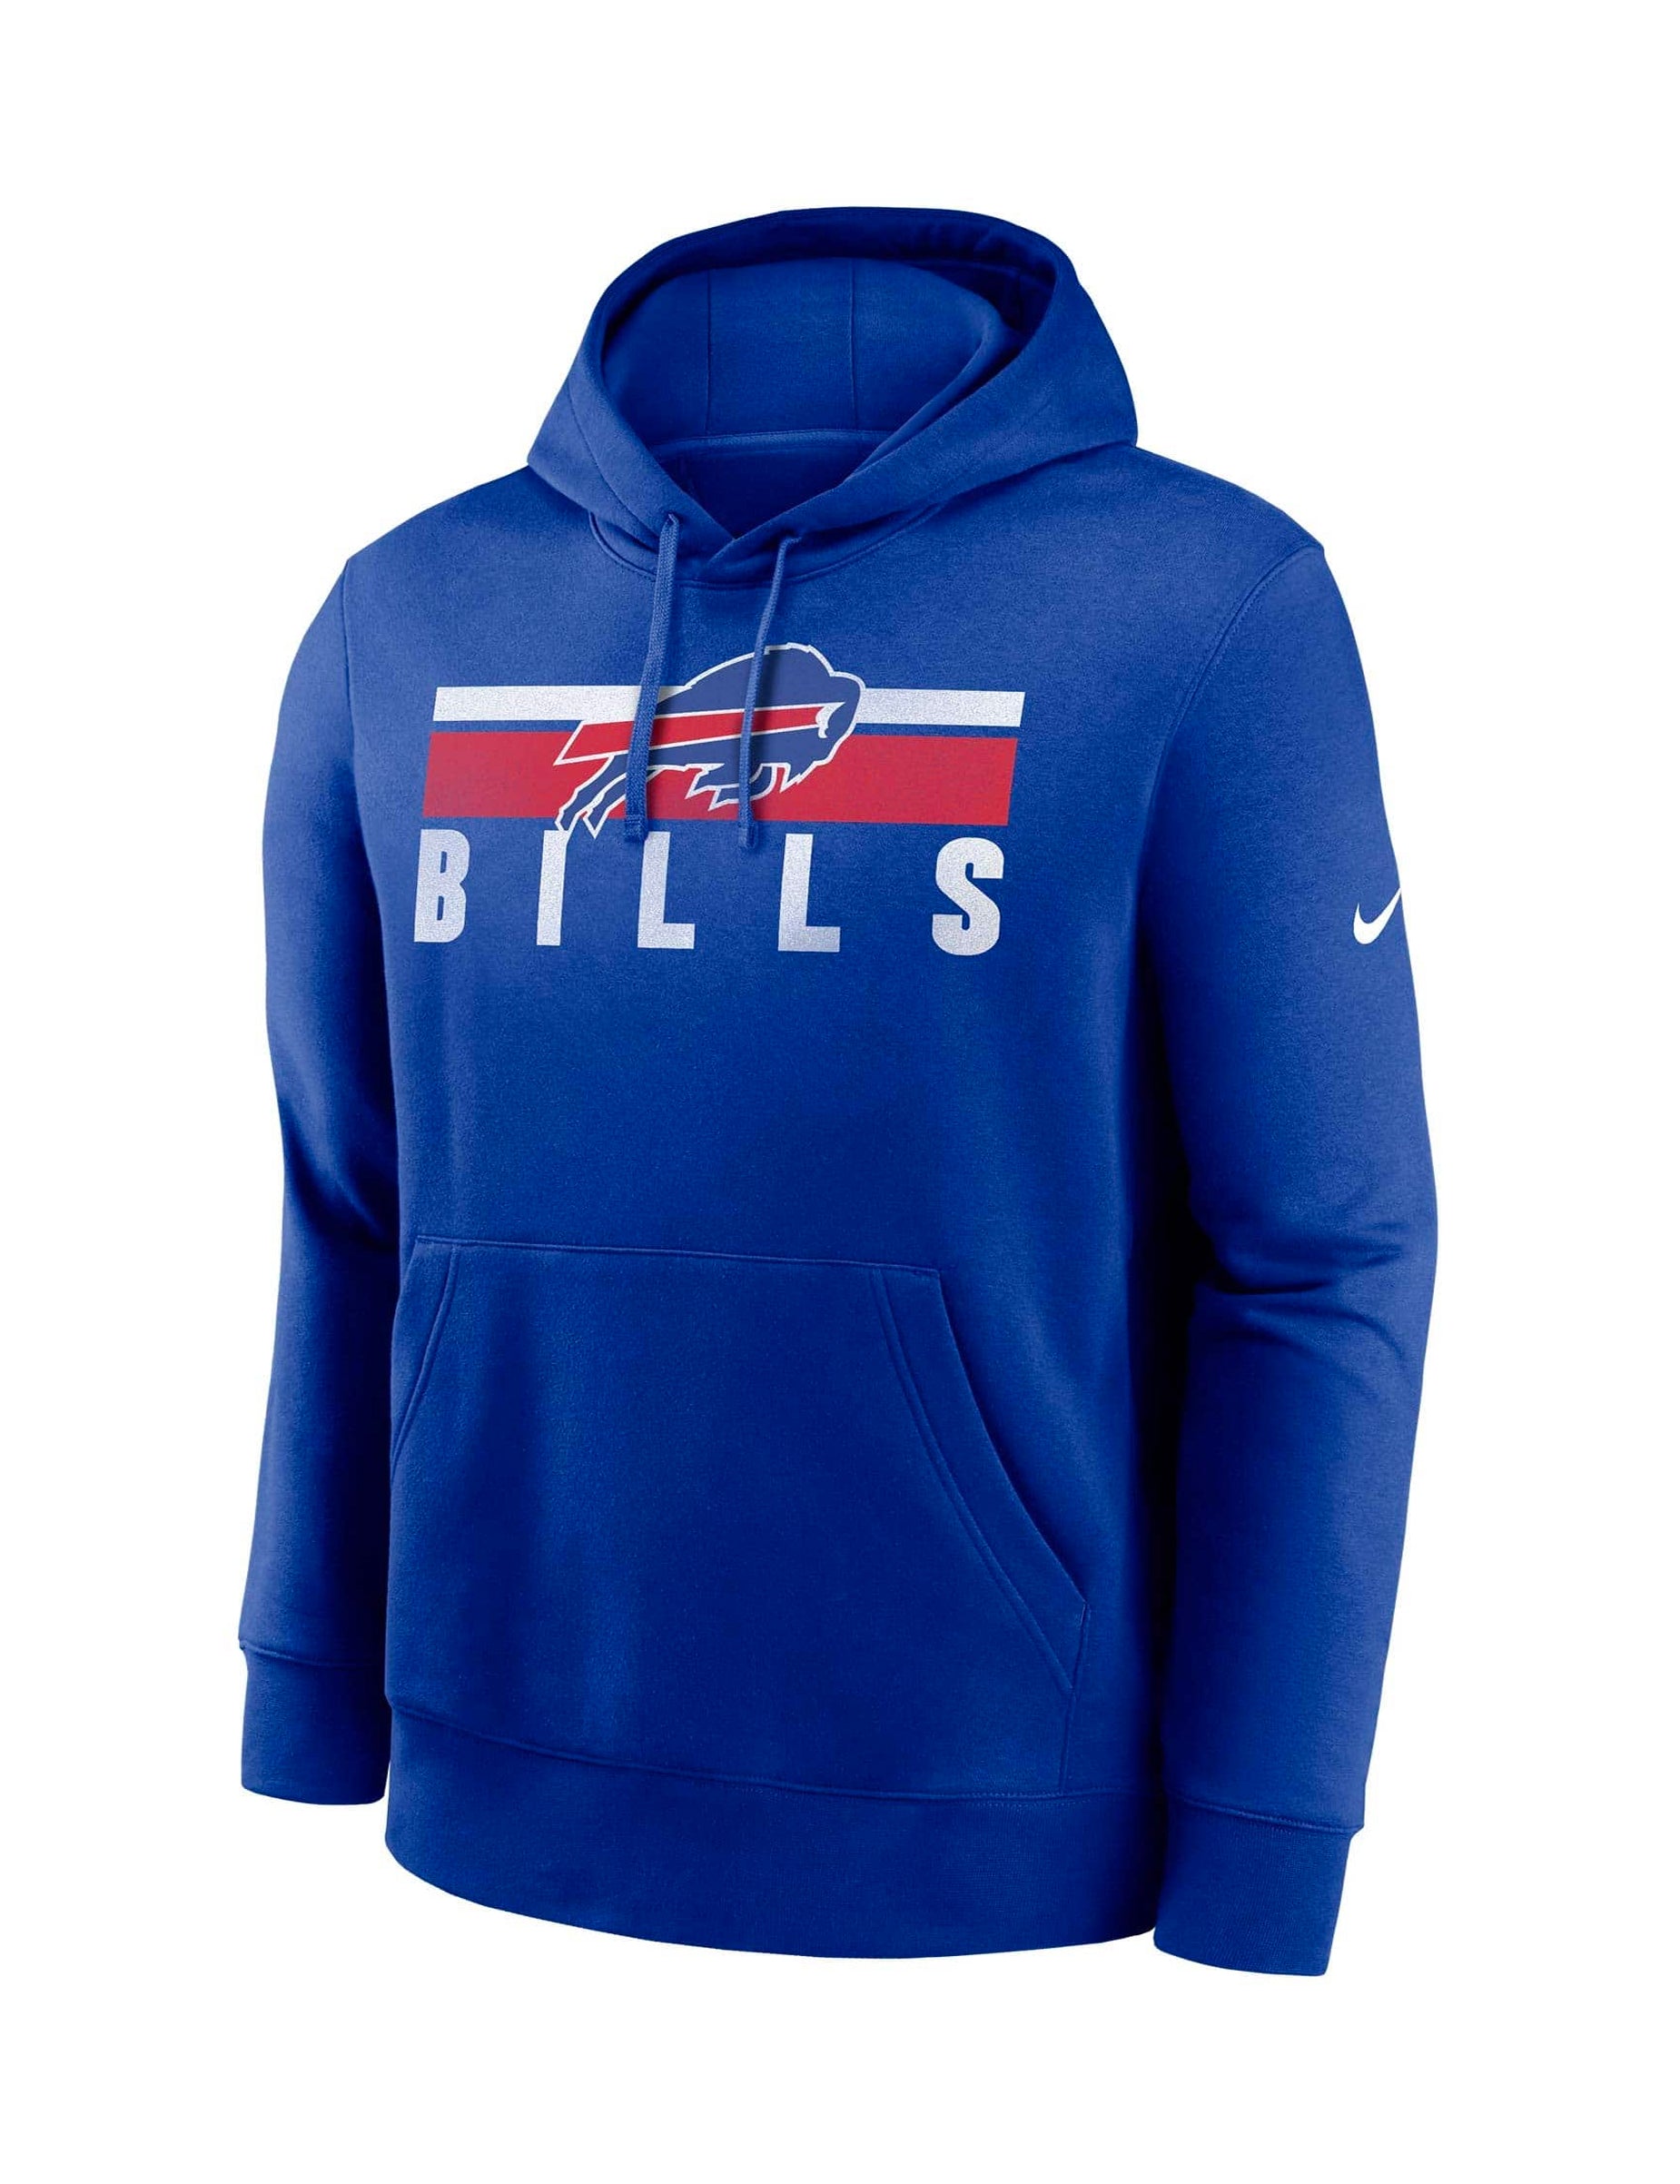 Buffalo Bills Nike NFL Team Stripes Hoodie Jumper - Blue